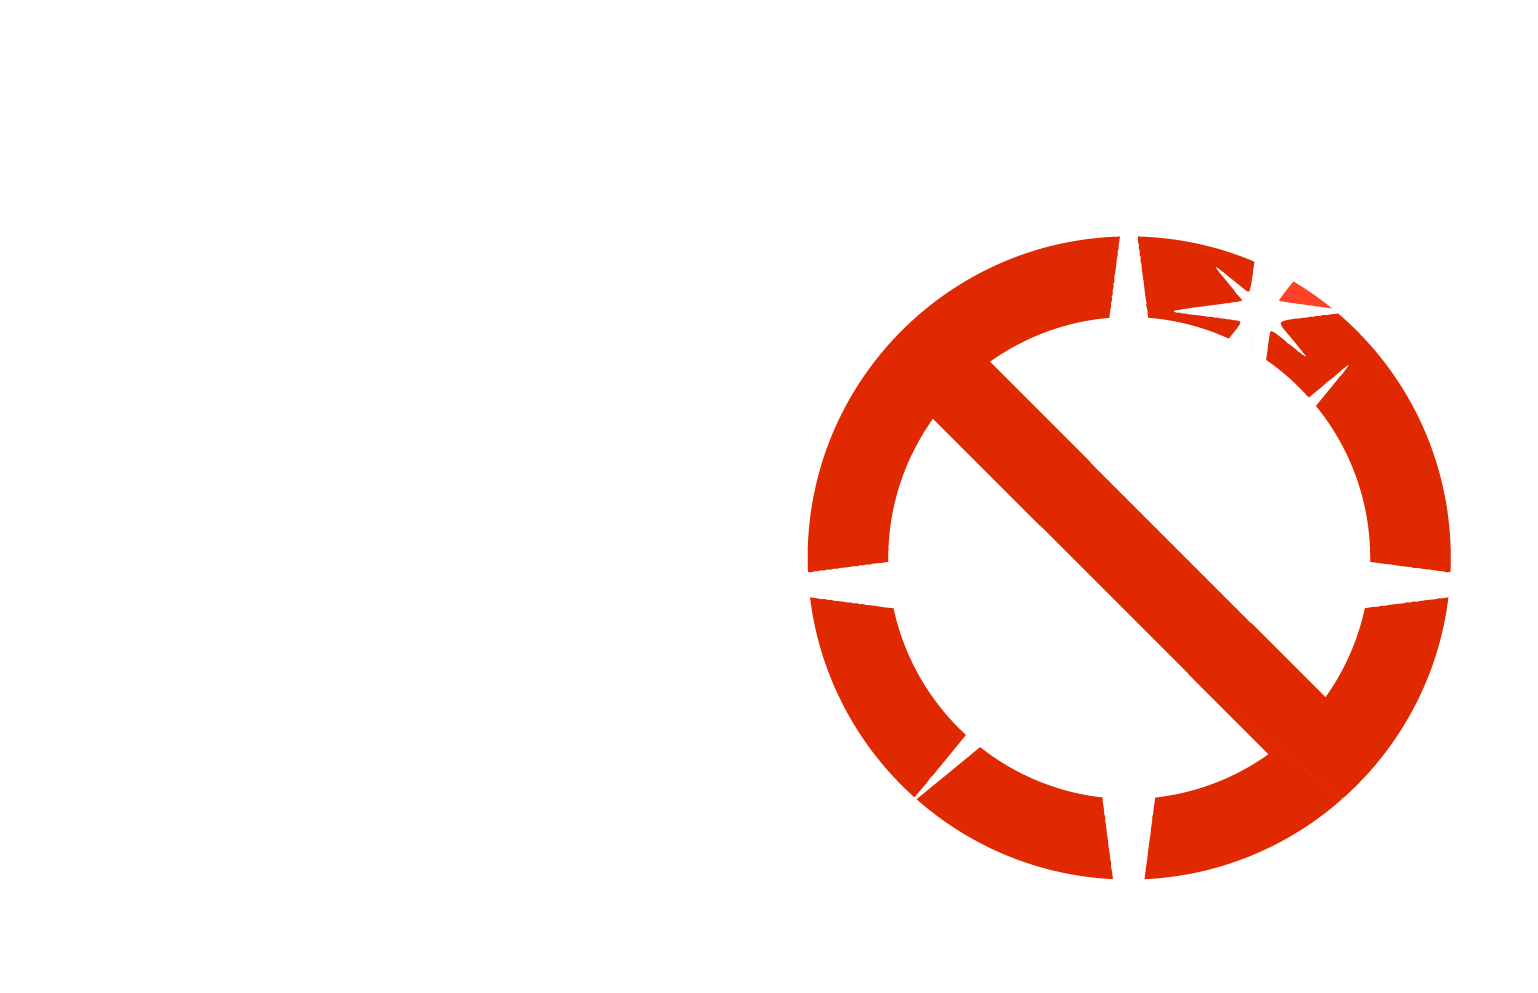 Don't Shine too Bright